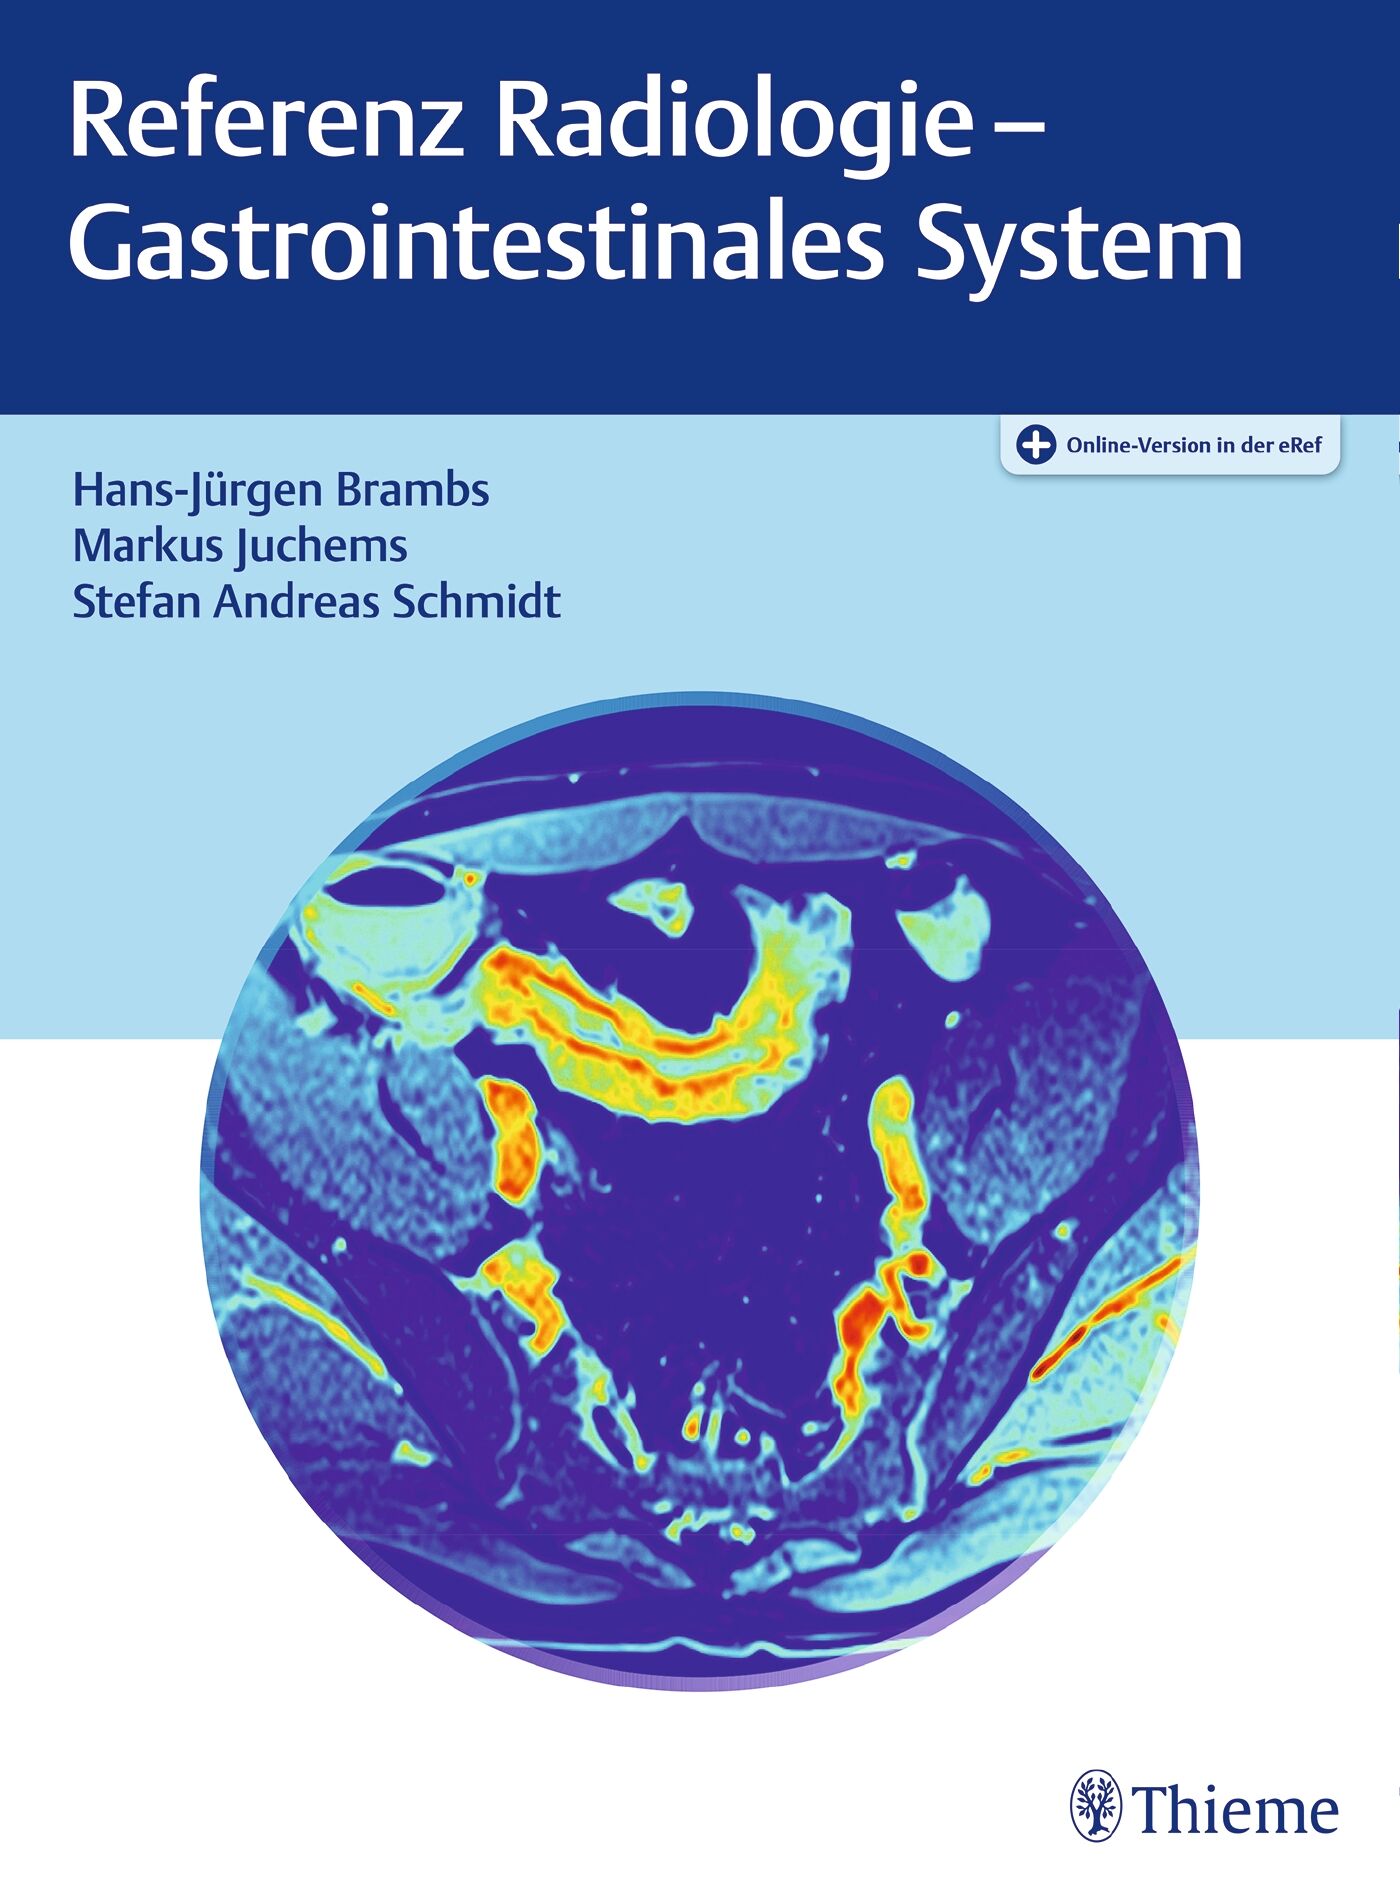 Referenz Radiologie - Gastrointestinales System, 9783132421530